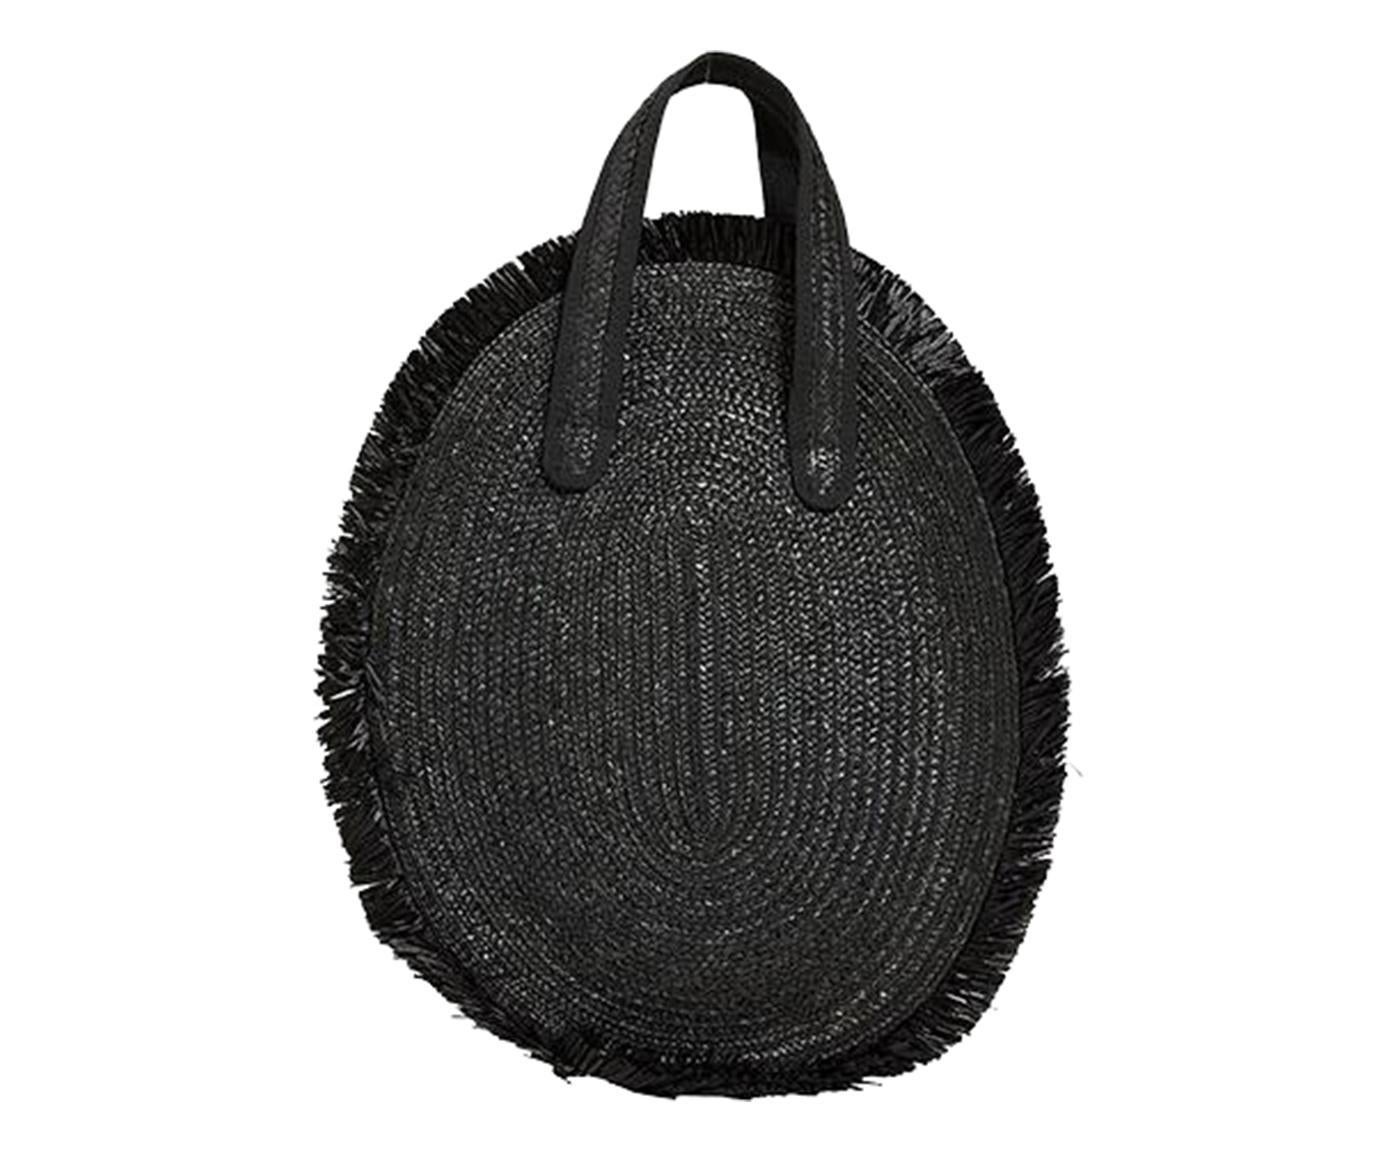 Women's or Men's Audrey black rafia handbag 